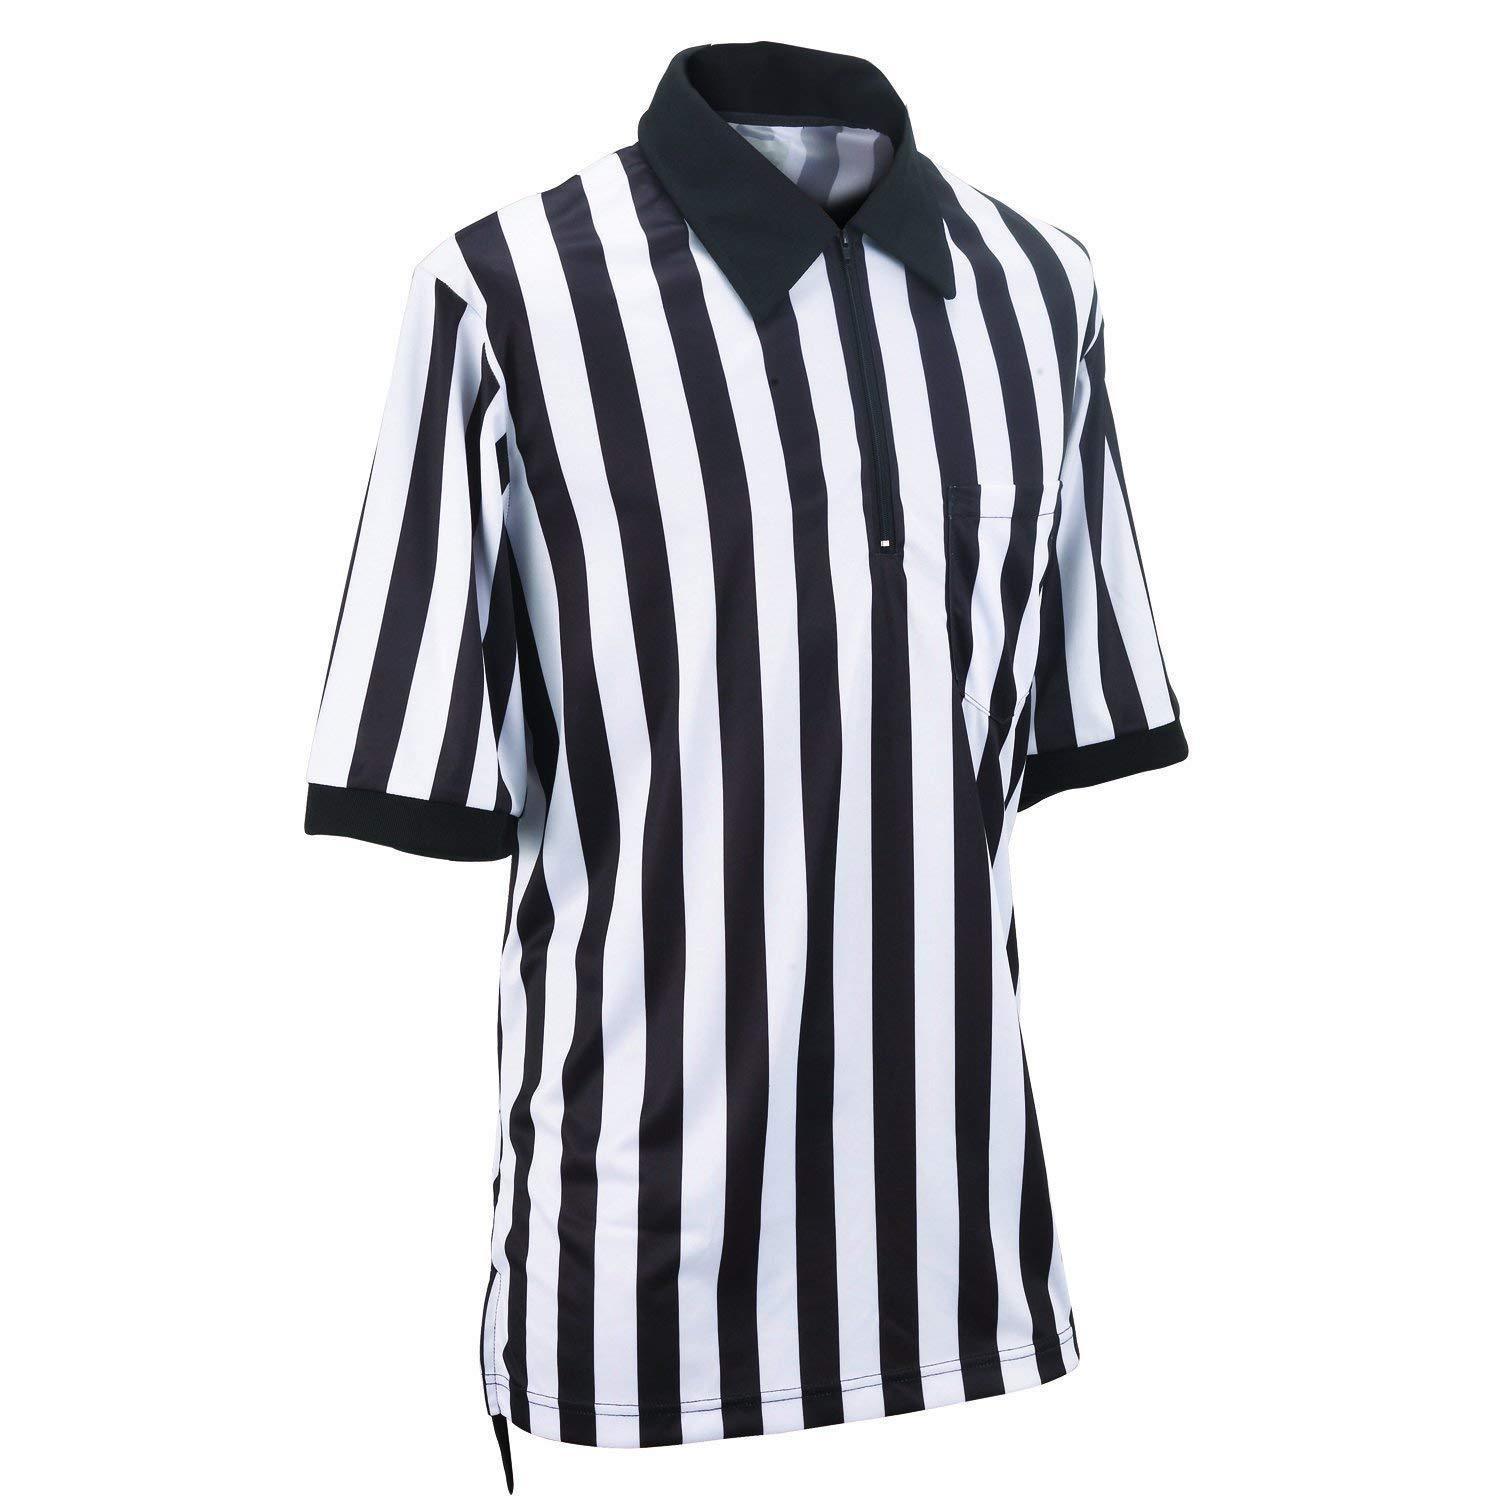 Smitty Collegiate Style Basketball Referee Jacket